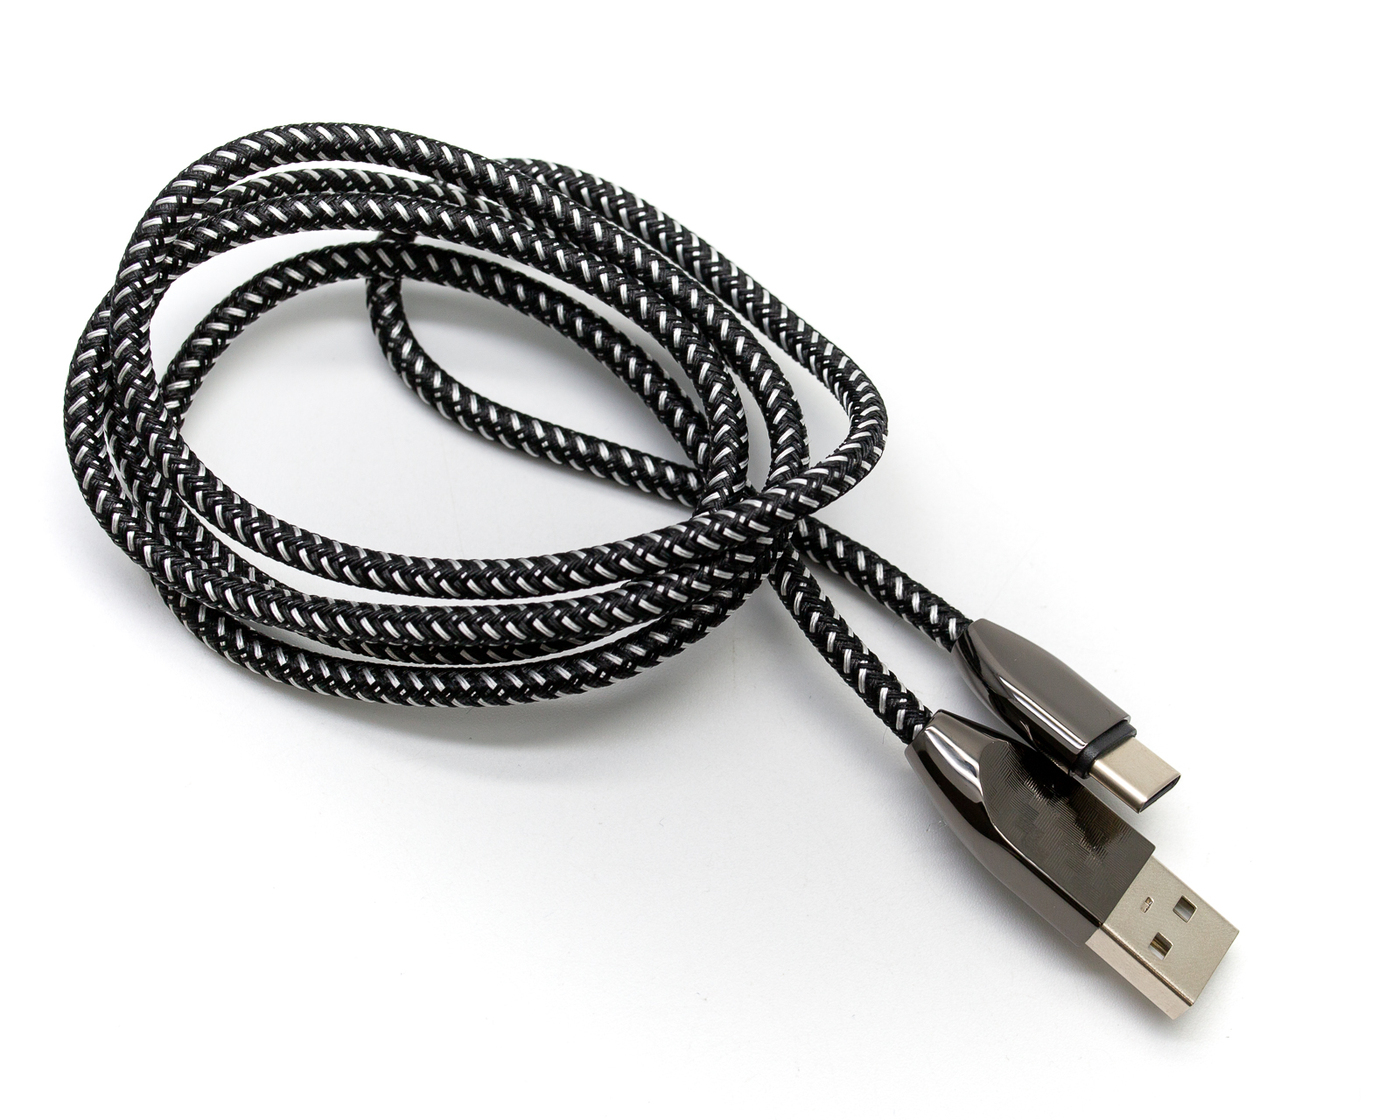 Isa USB 2.0 - Type-c 01, 2,1a, 1 метр, металл/нейлон, серебро. Усиленный провод. Усиливающий провод. Кабель USB - Type-c FONENG x82 1m, 3a , нейлон (Black) цена кабеля 145 руб.